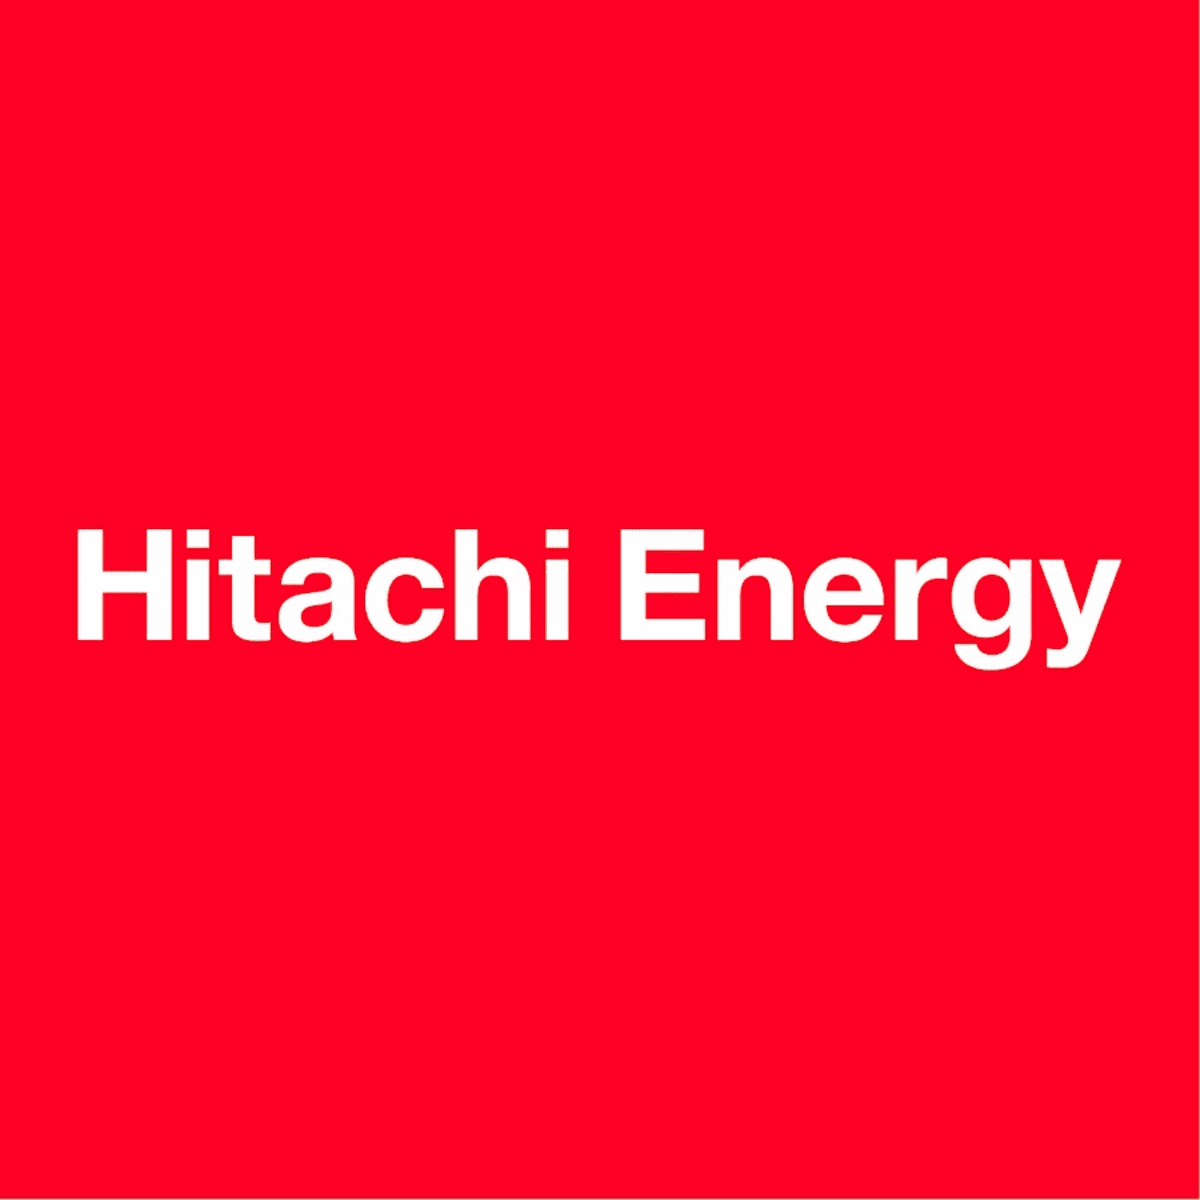 New Job at Hitachi Energy Tanzania 2022, Nafasi za kazi Hitachi Energy Tanzania 2022, Hitachi Energy Tanzania Vacancies, Hitachi Energy Jobs